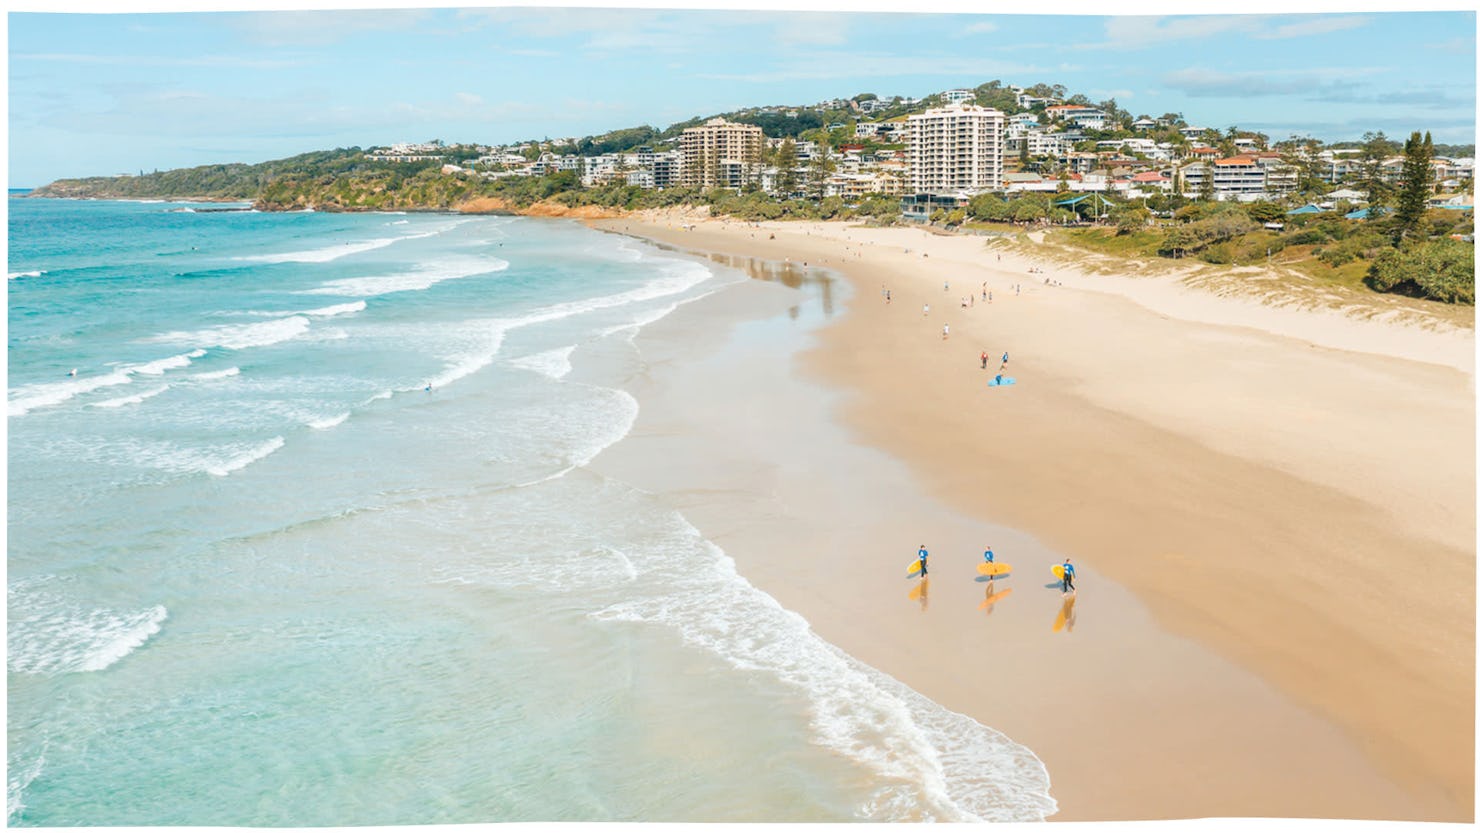 7 Sunshine Coast beaches in 7 sunshine-filled days